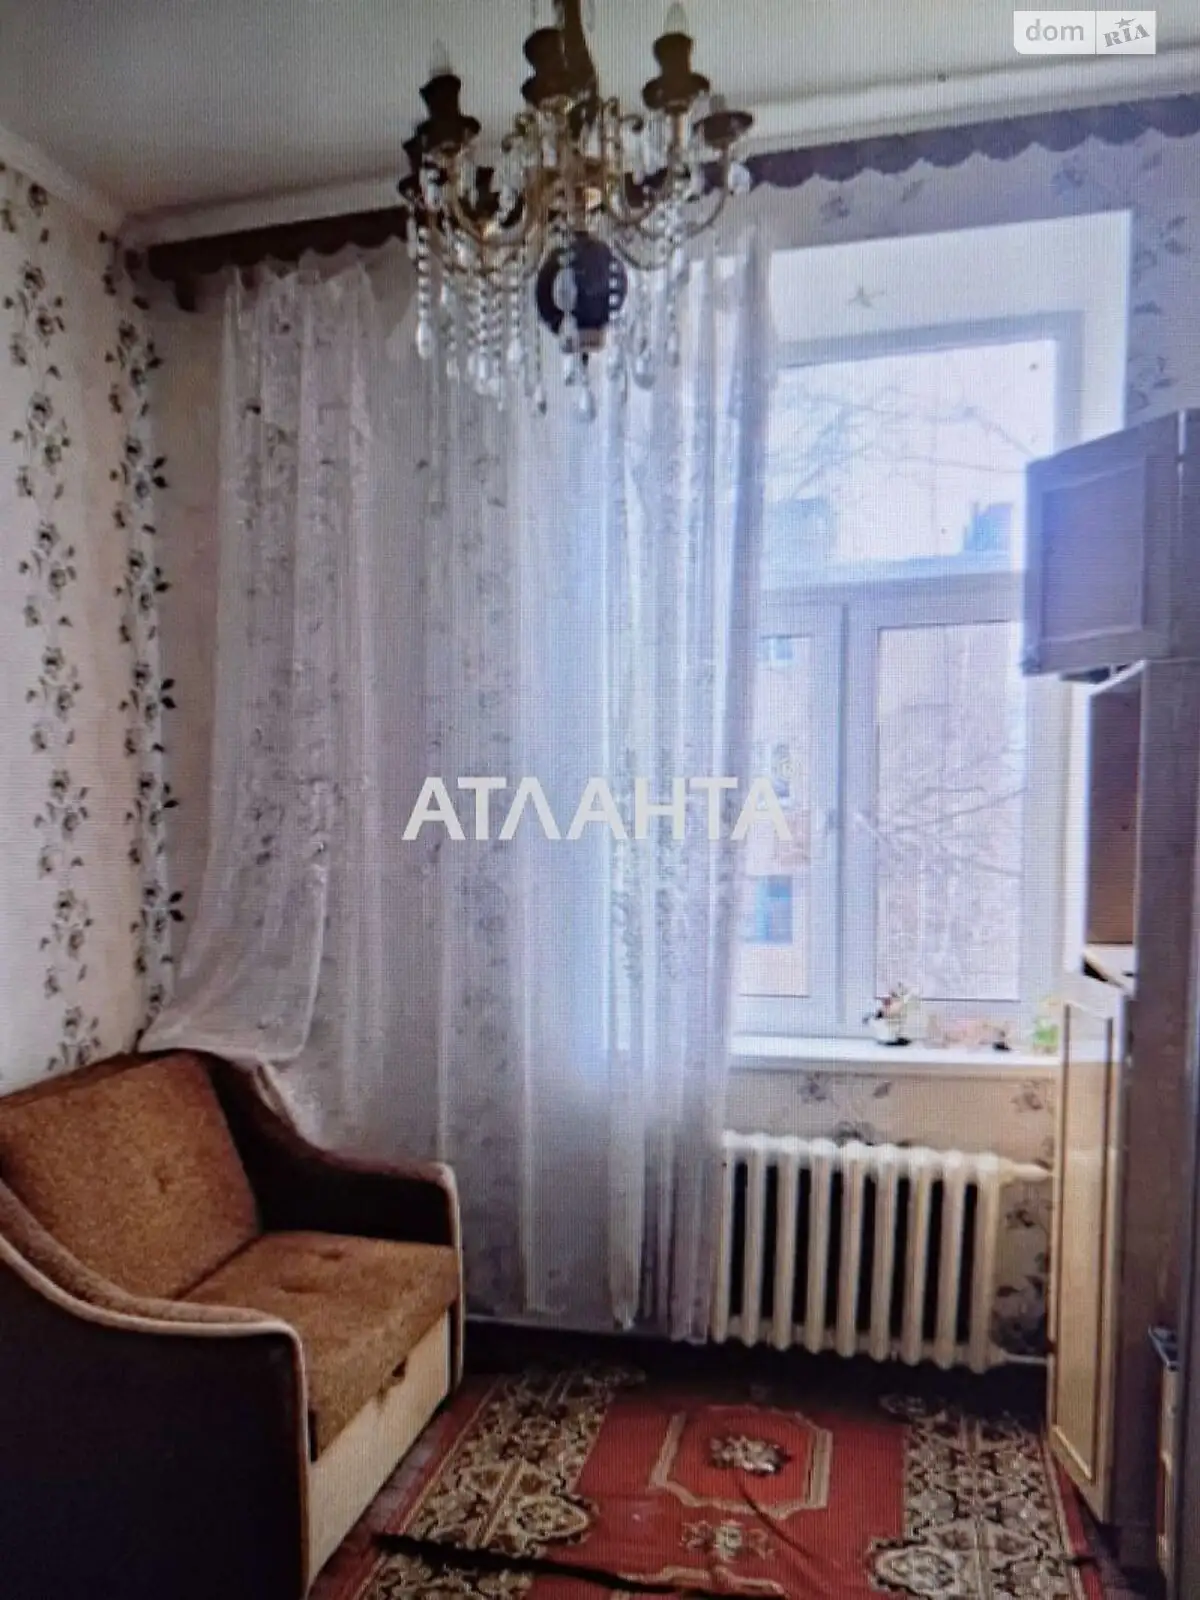 Продается комната 21 кв. м в Одессе, цена: 10000 $ - фото 1